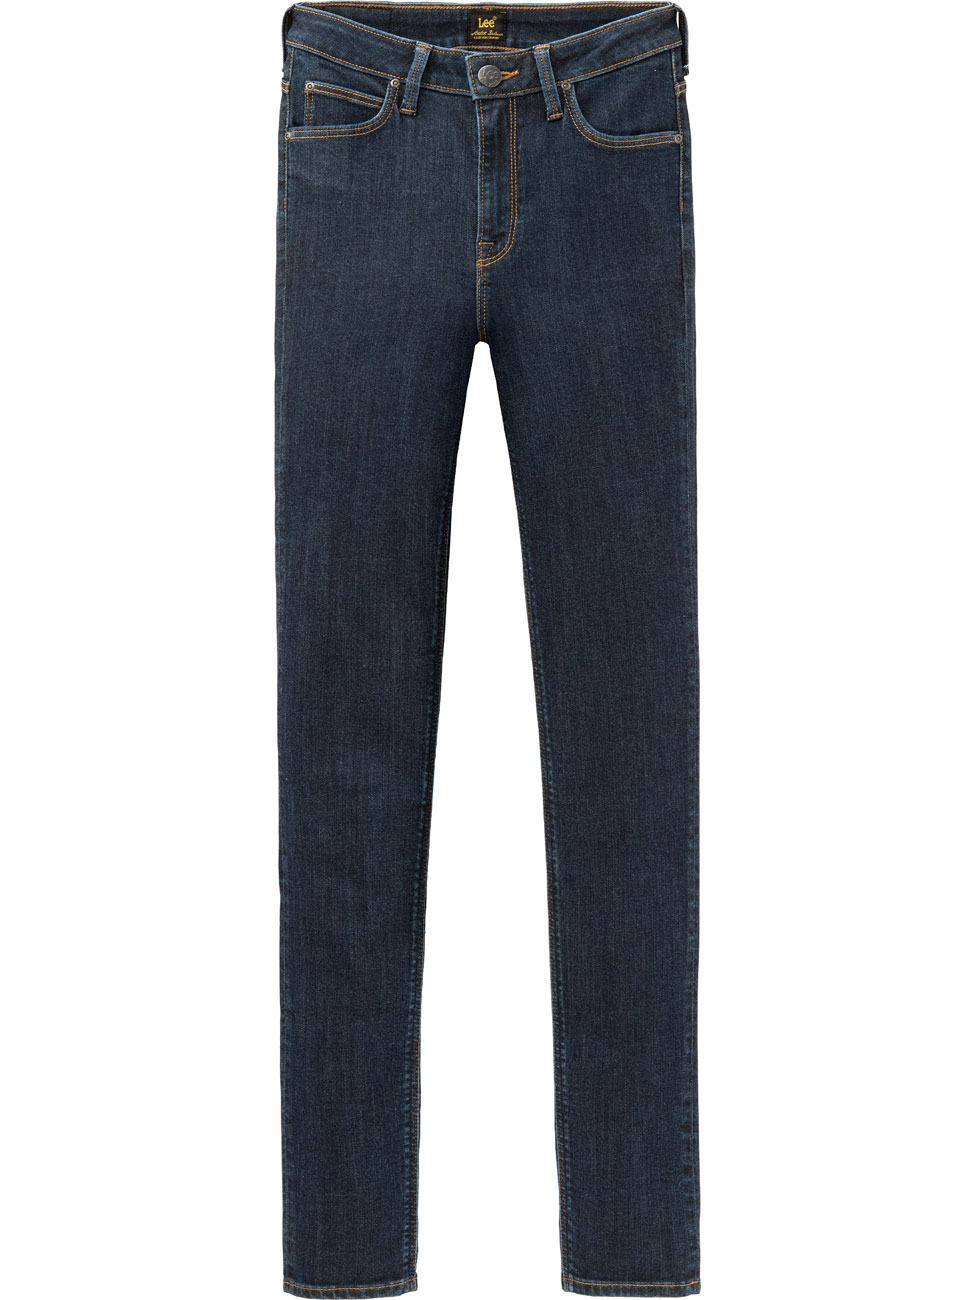 Lee Damen Jeans Jeanshose Stretch Scarlett High Skinny Fit - Blau - Tonal Stonewash